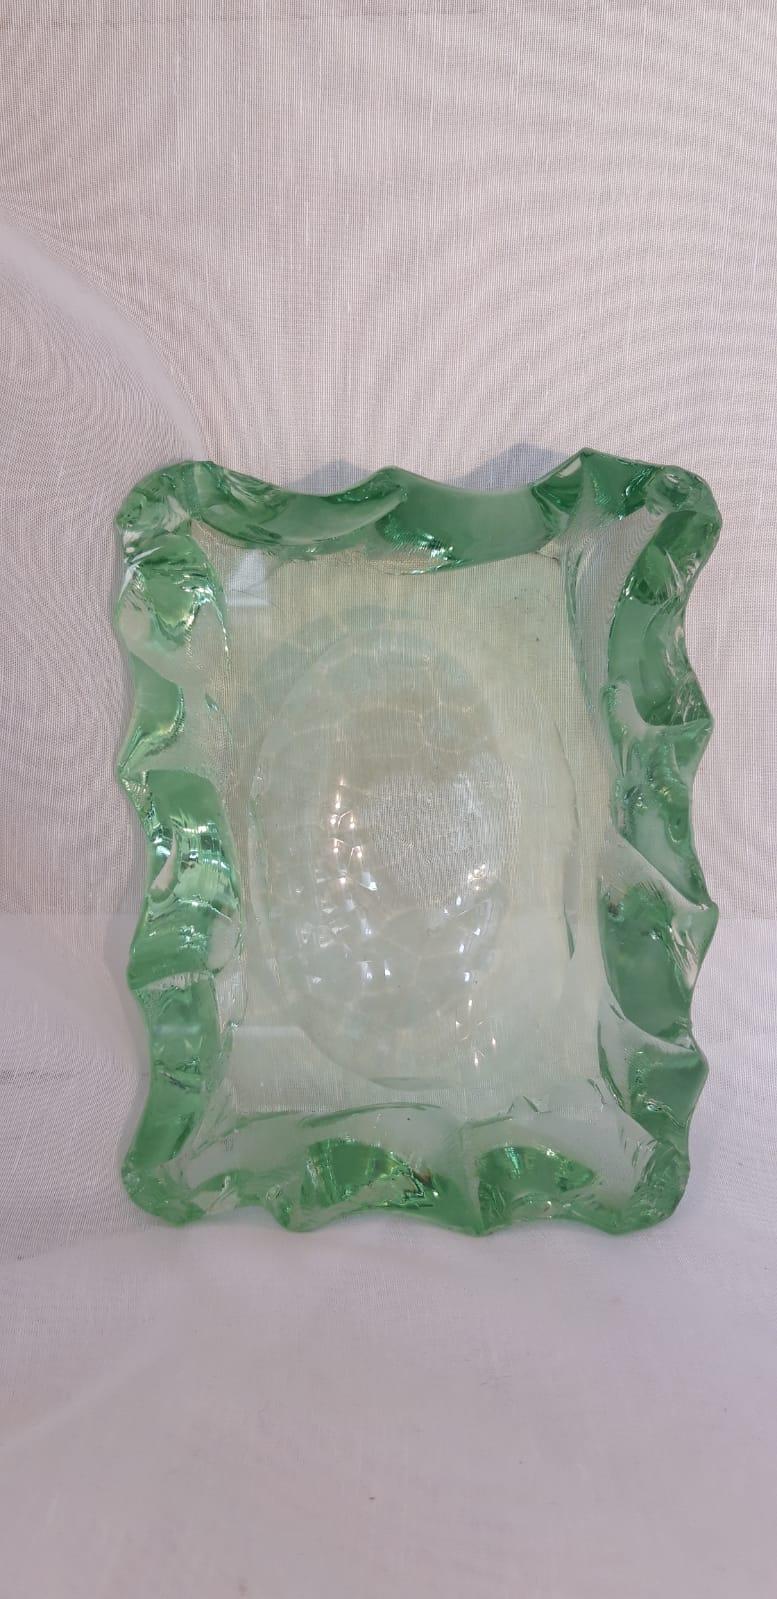 Rare 1950s Max Ingrand for Fontana Arte Cut Glass Vide Poche/Bowl/Dish For Sale 4